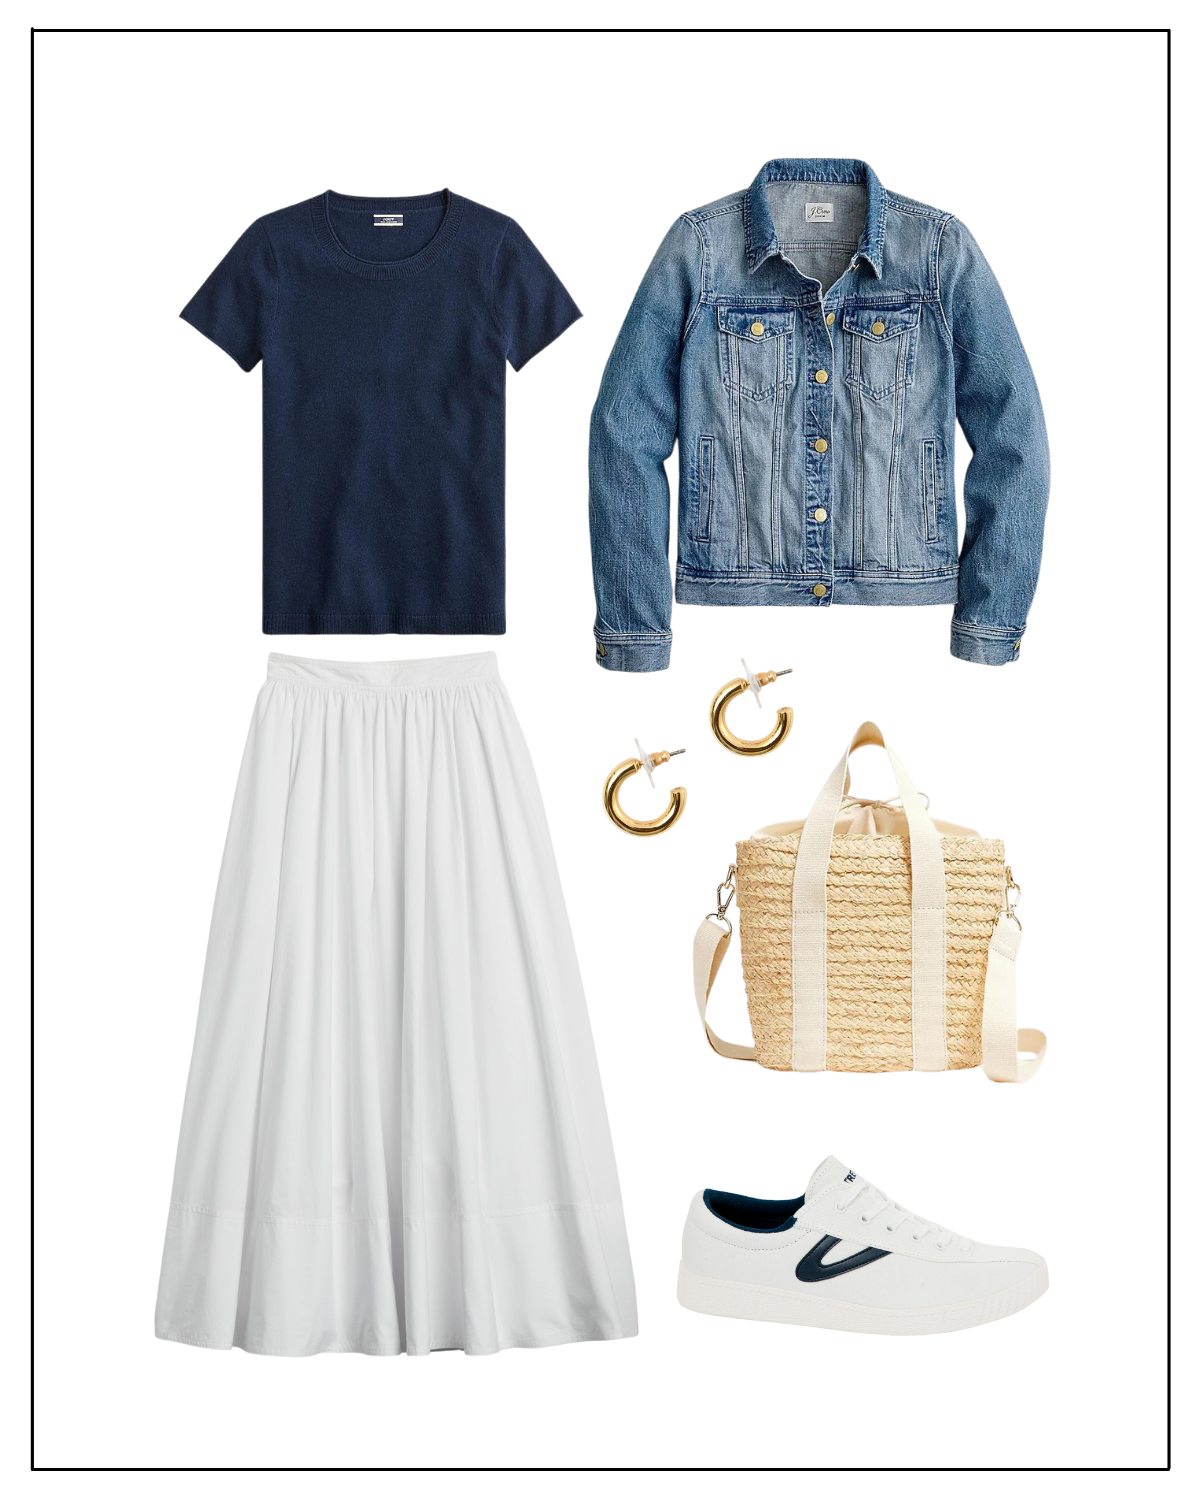 How to Style a White Midi Skirt